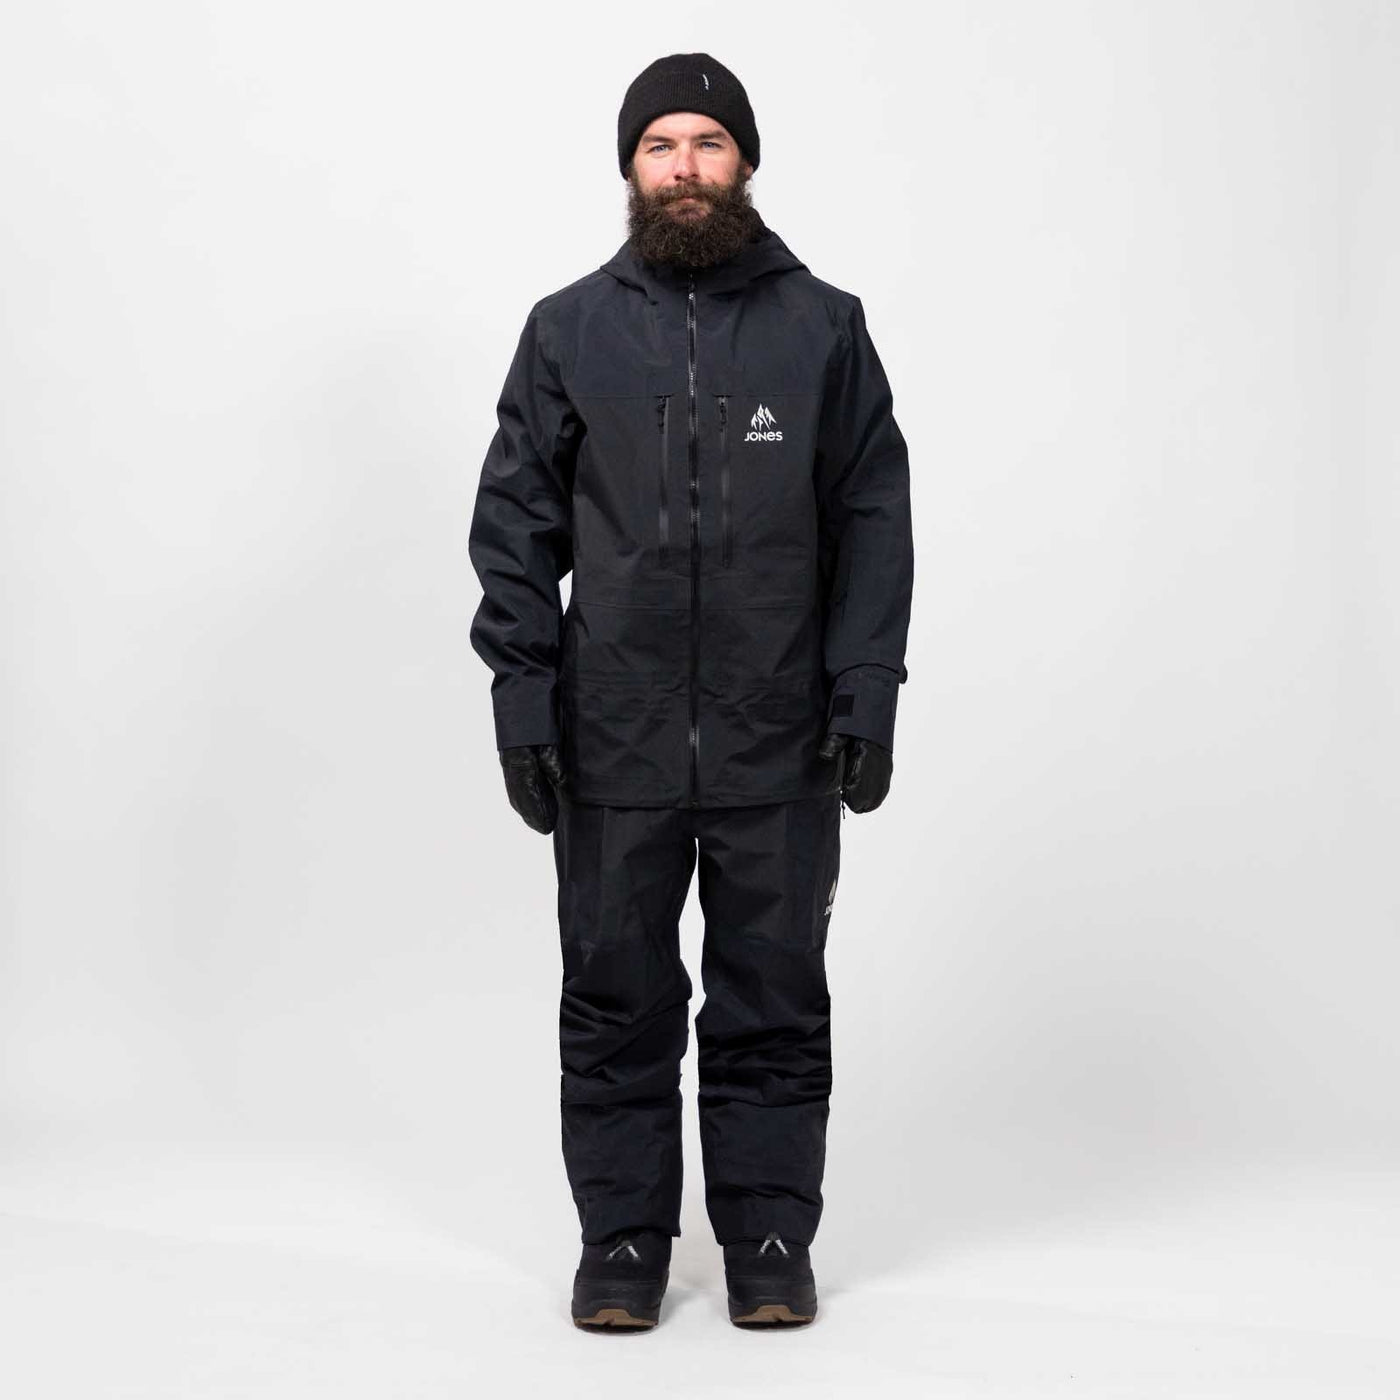 JONES Shralpinist 3L GORE-TEX Pro Snow Jacket - Black